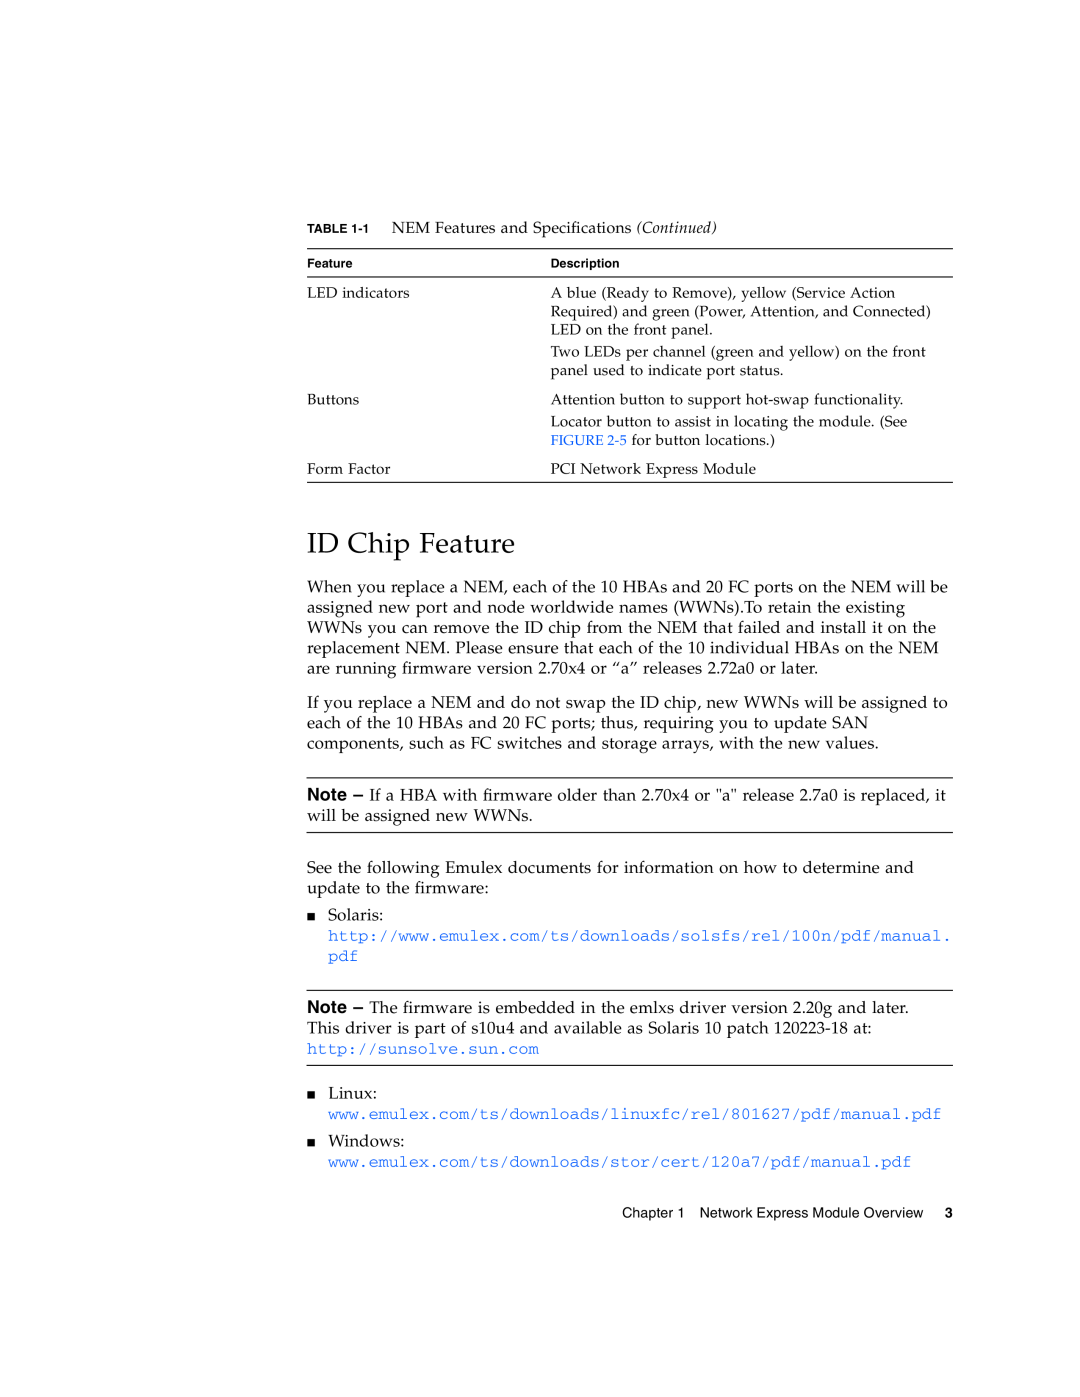 Sun Microsystems 2.0 manual ID Chip Feature, http//sunsolve.sun.com 